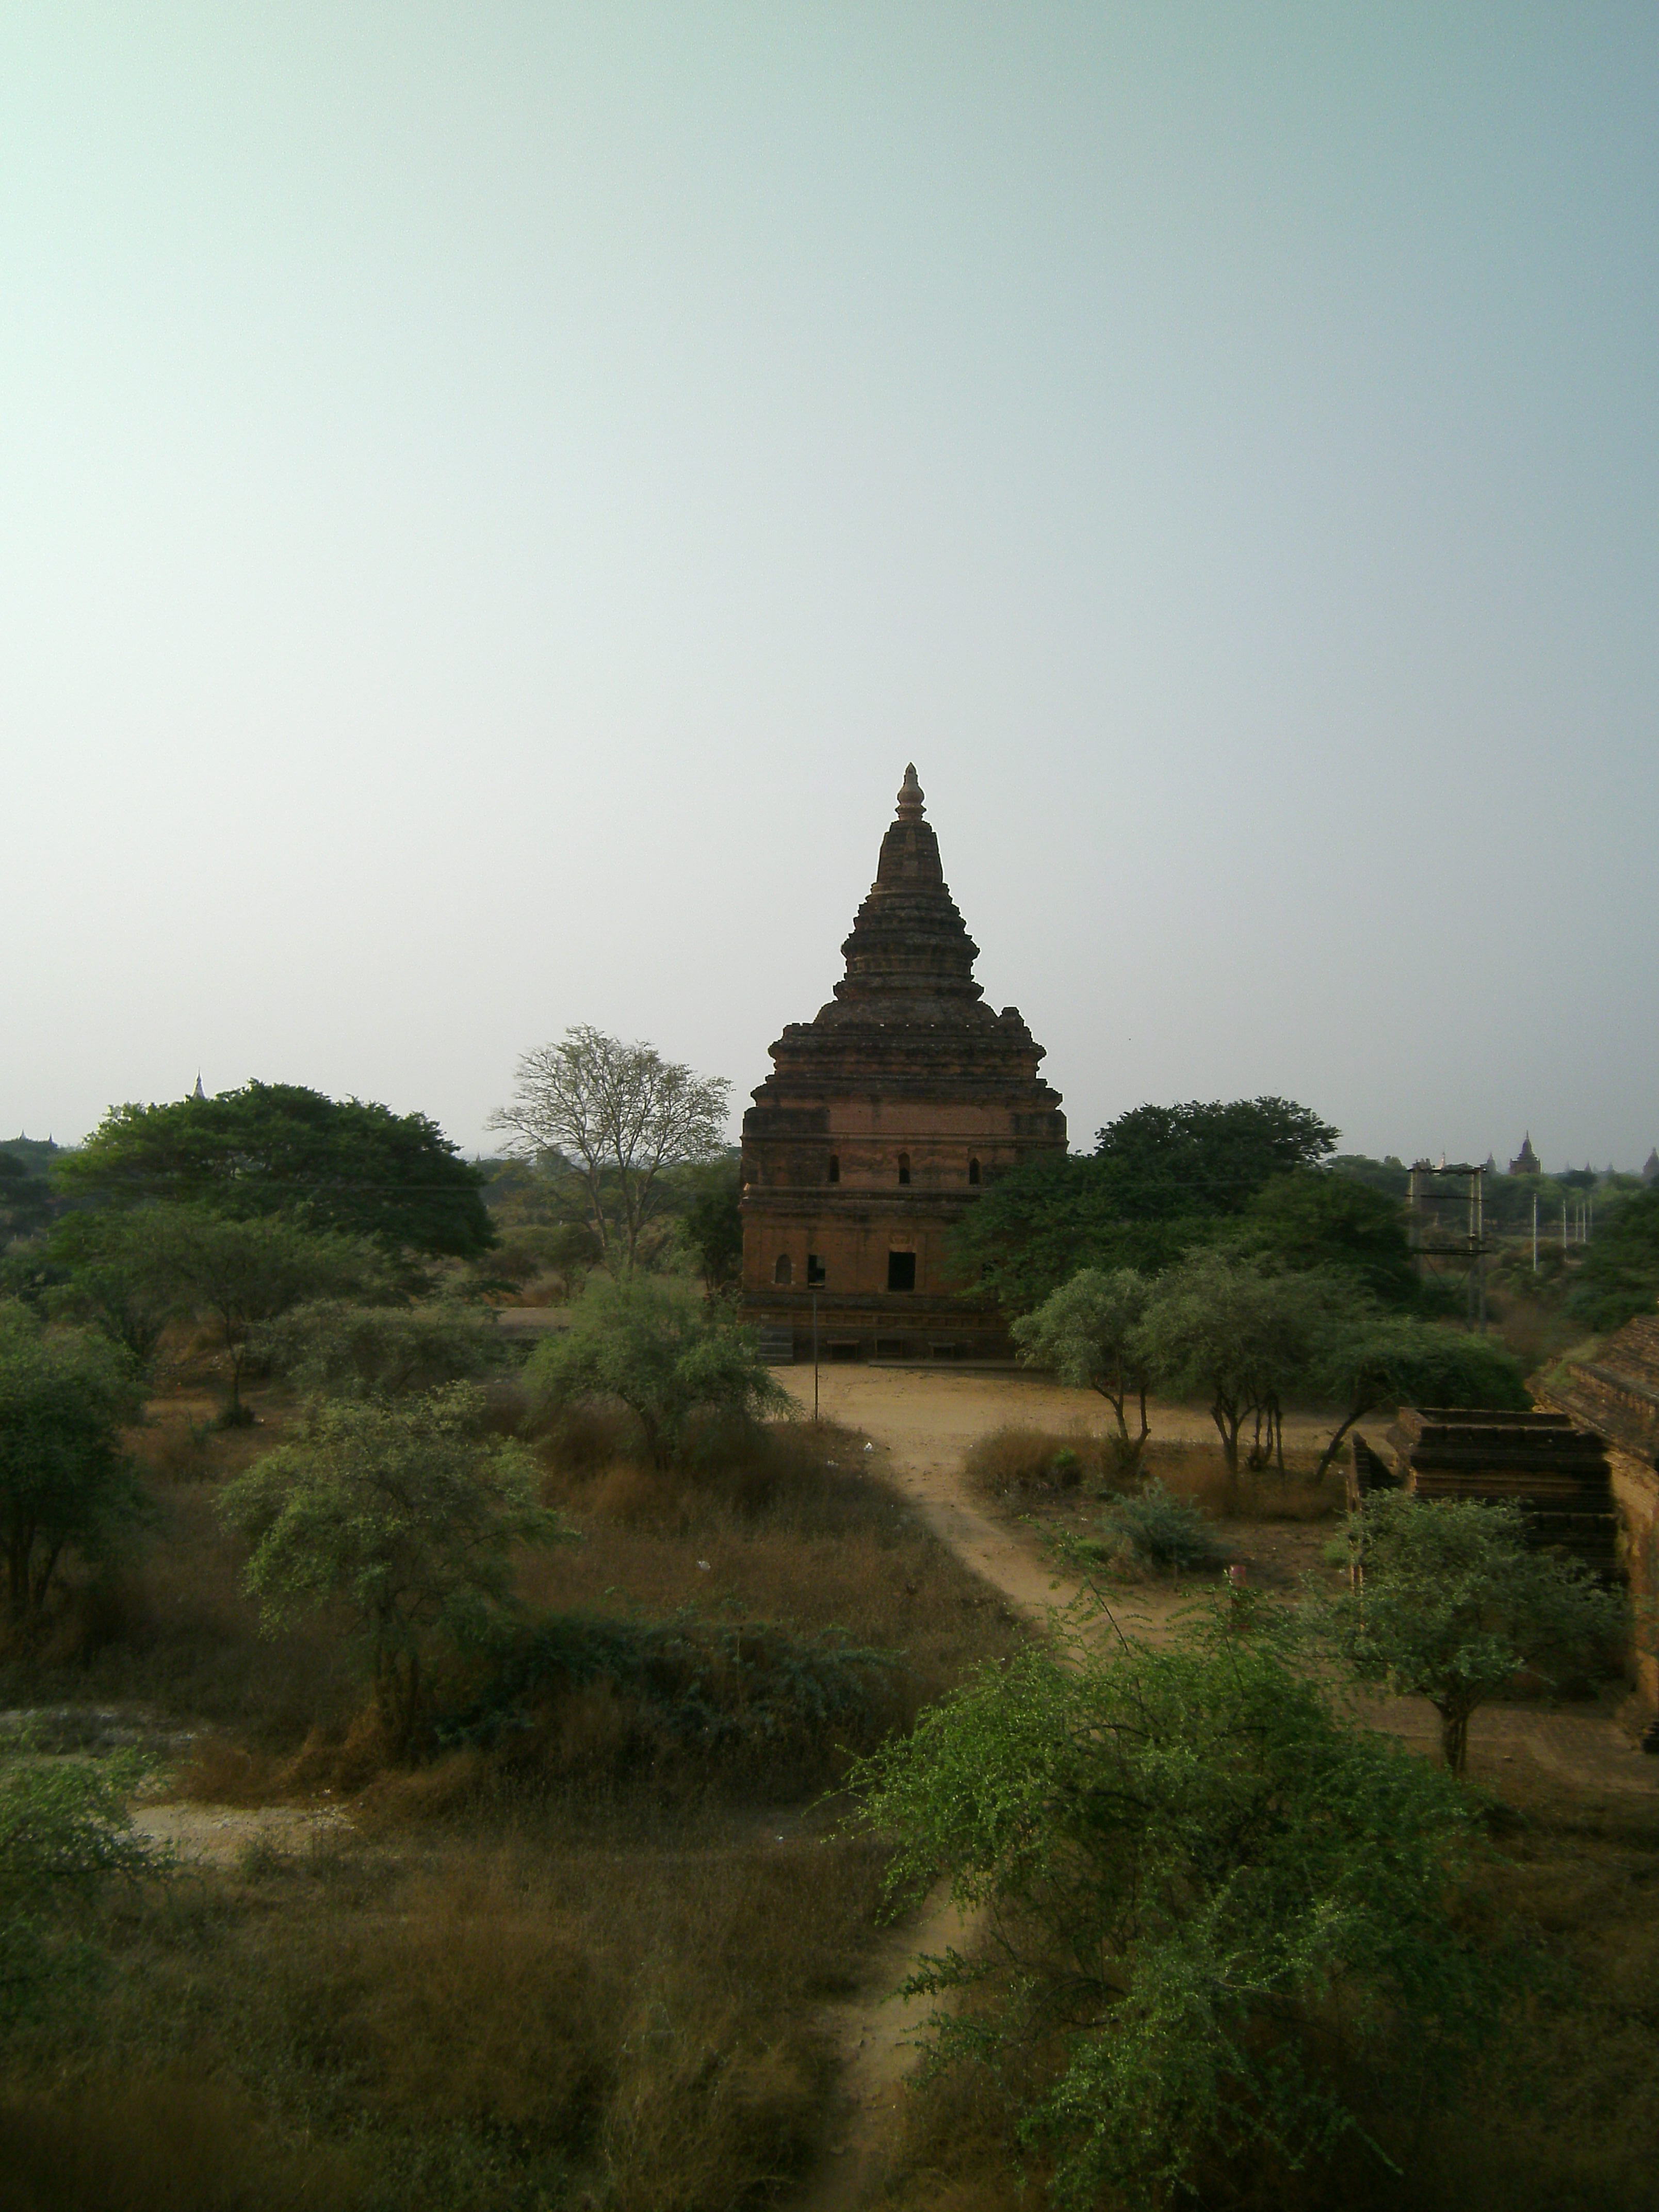 Nathlaung Kyaung Temple in Burma